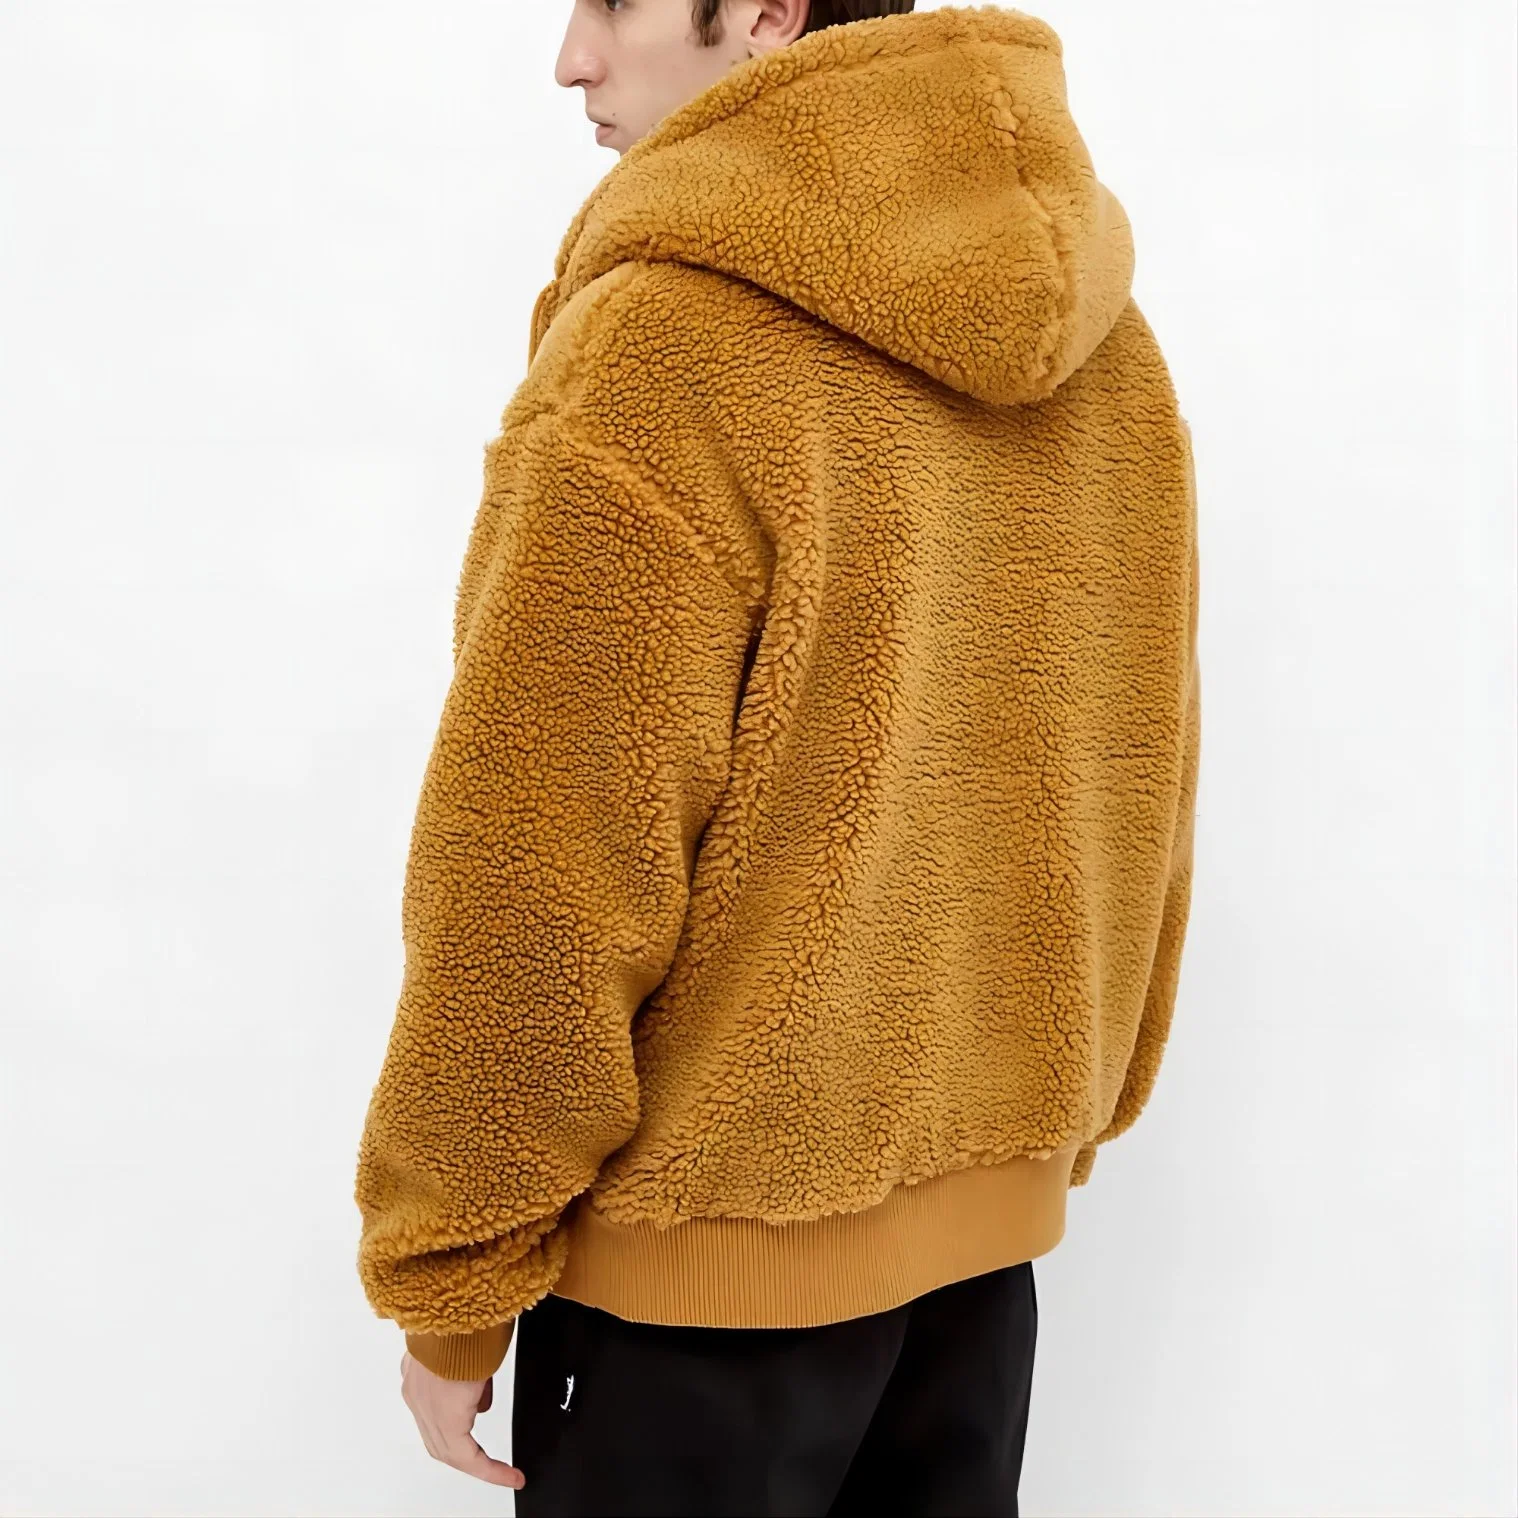 Zip up Hoodie Winter Warm Thick Oversized Hairy Men Furry Fluffy Fur Fleece Sherpa Coat Hoodies Jacket